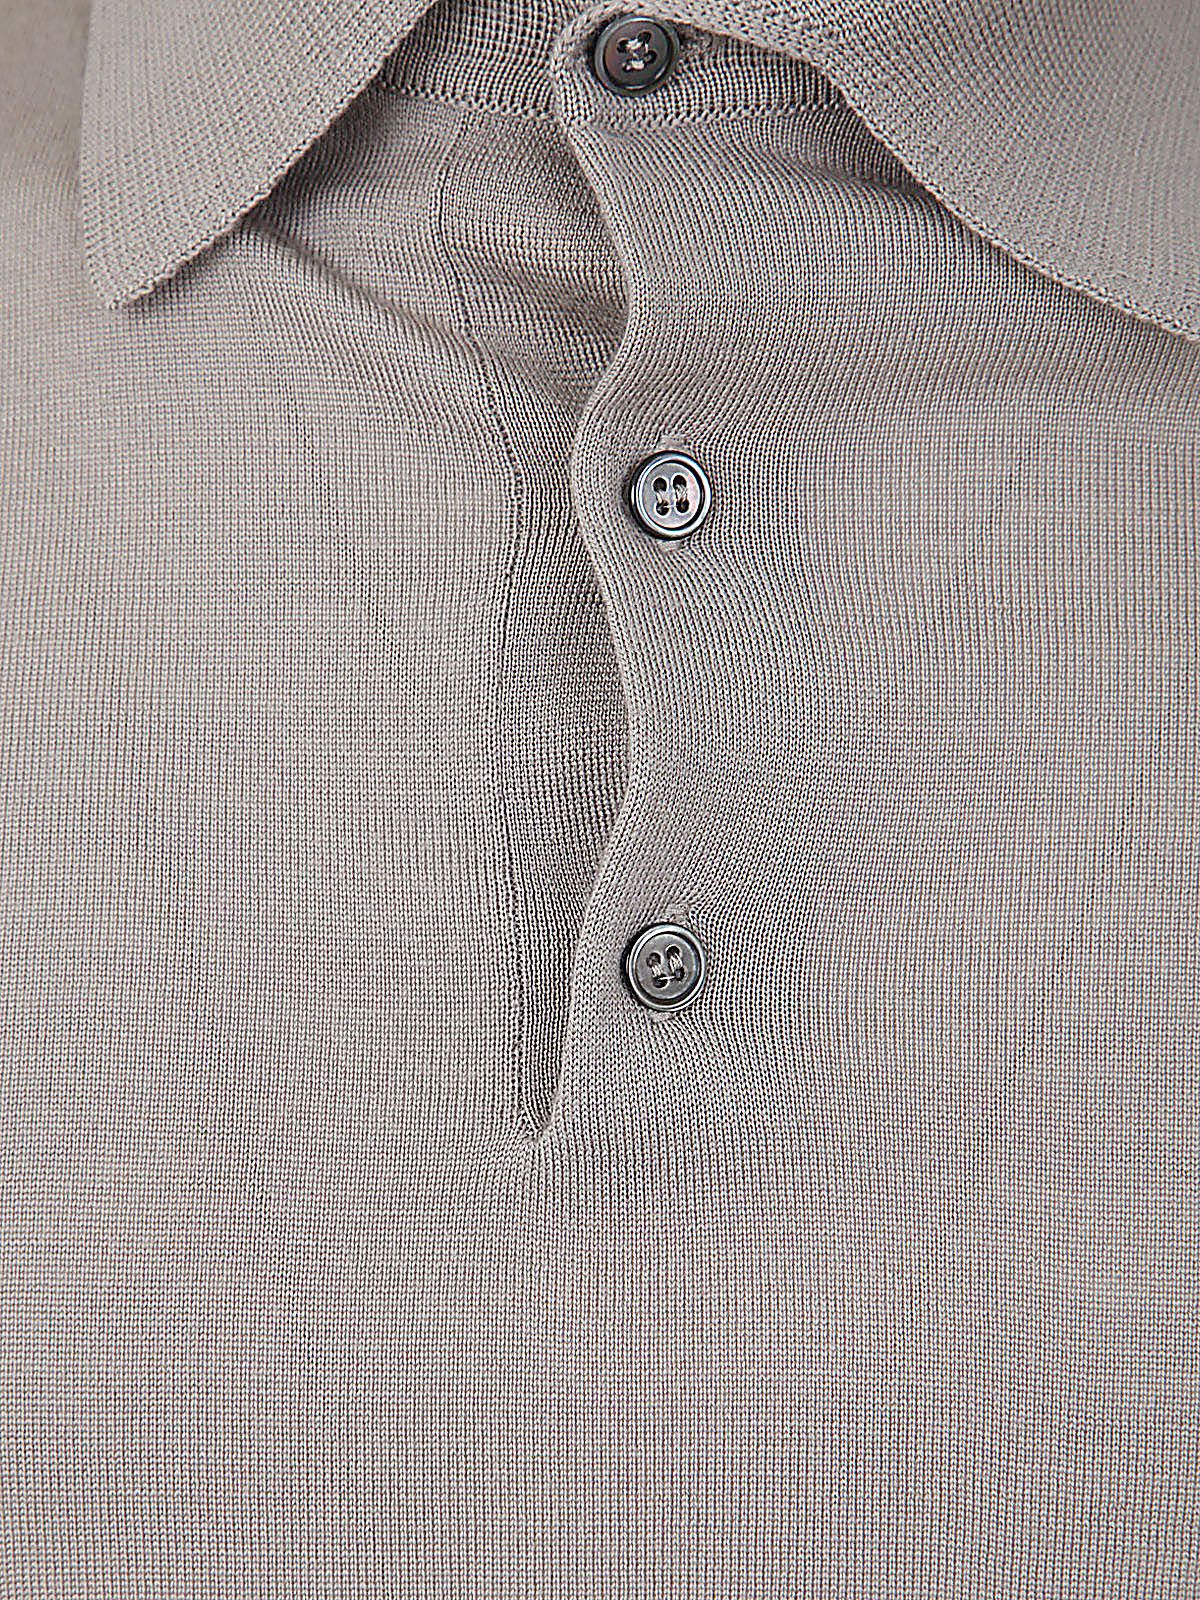 Shop Filippo De Laurentiis Men's Wool Polo Shirt